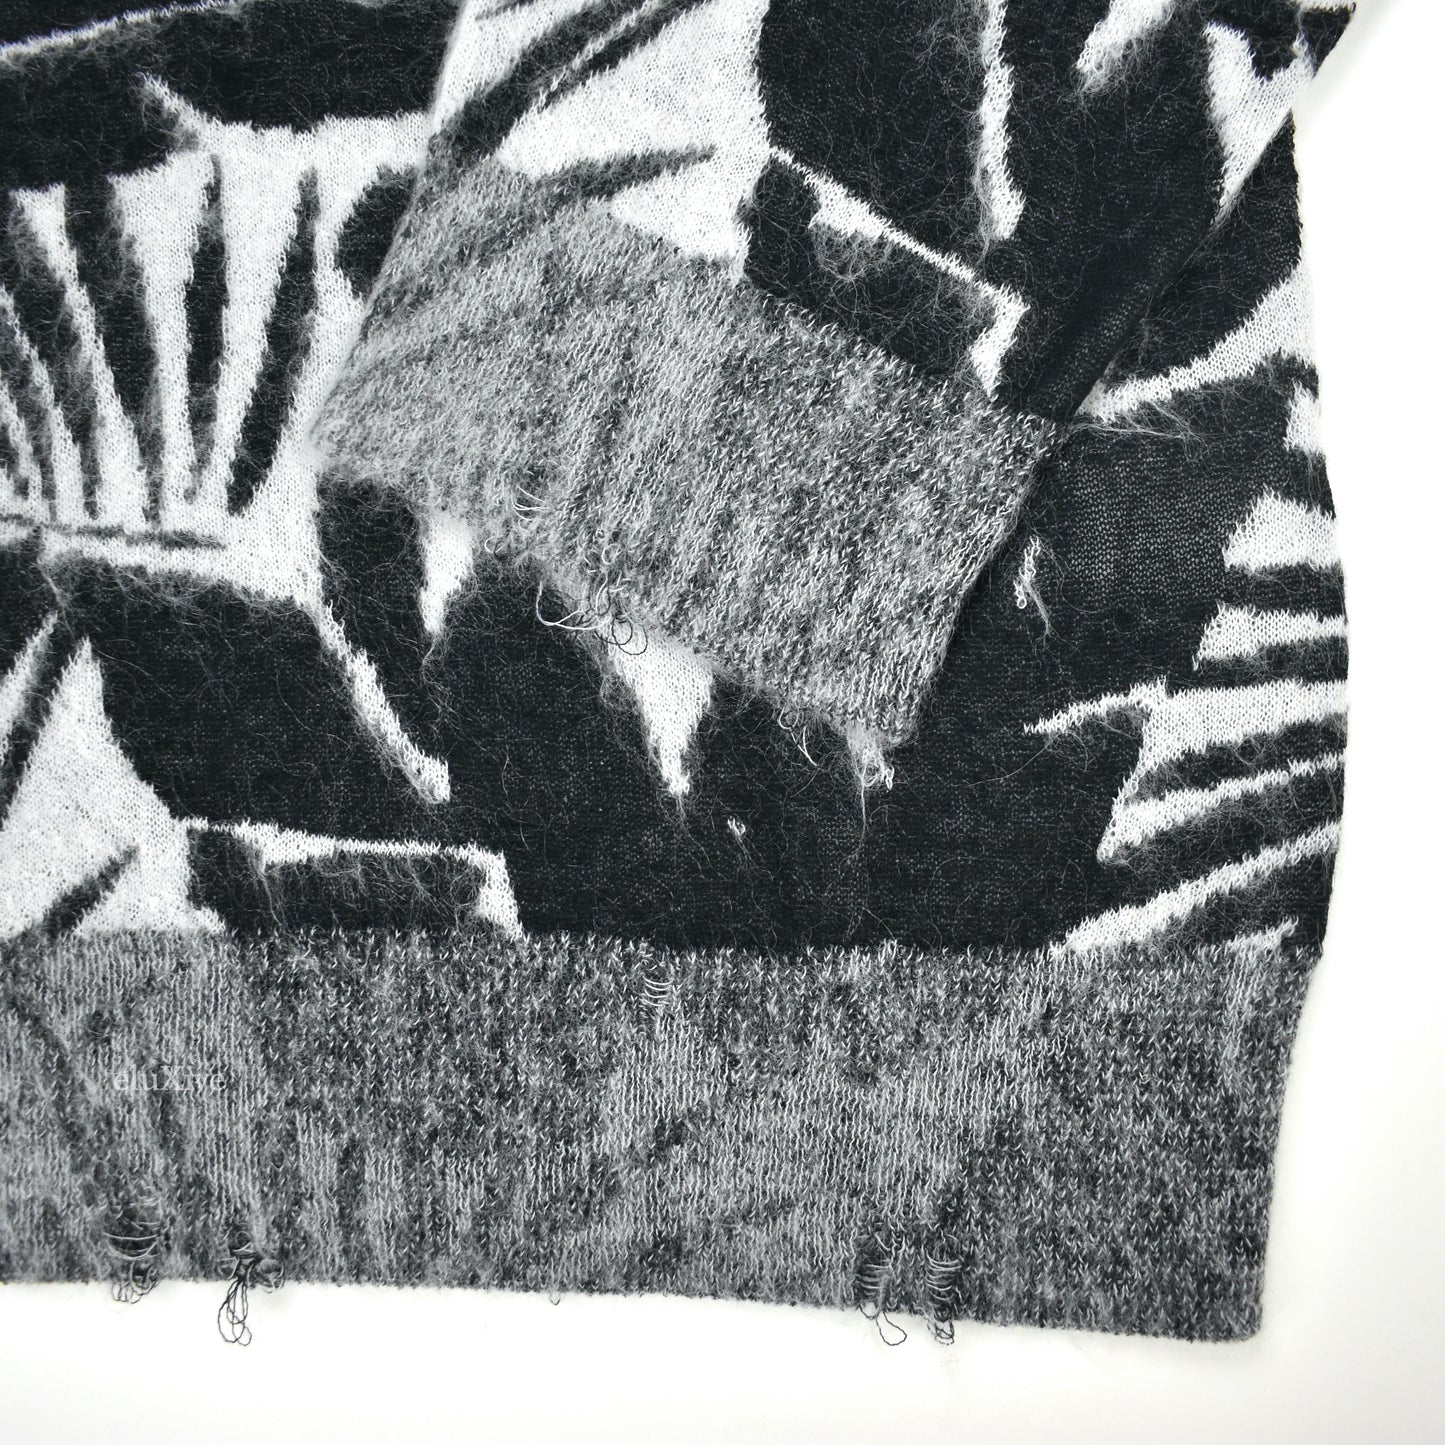 Saint Laurent - Distressed Tropic Palm Knit Crewneck Sweater